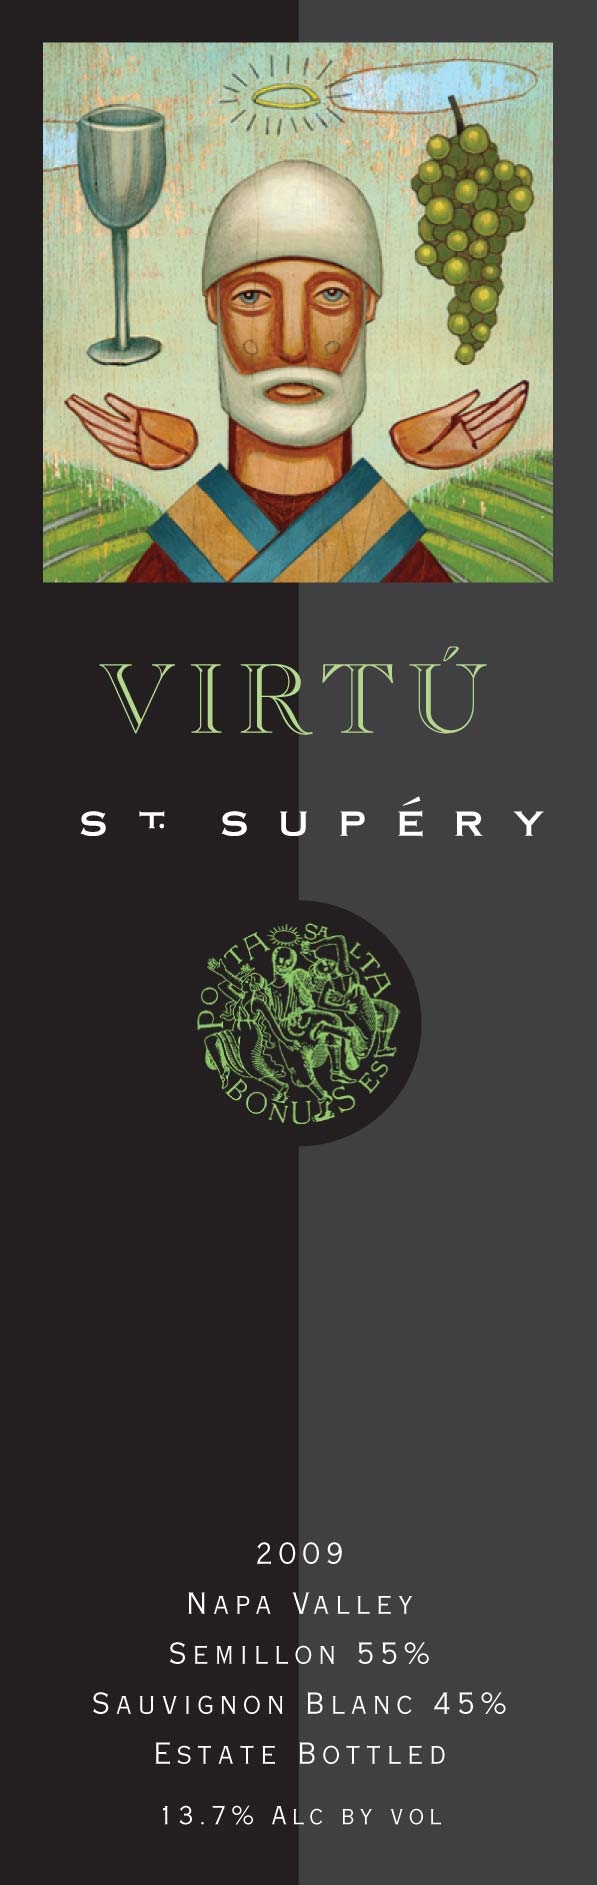 2012 St. Supery Estate Virtu Meritage White Napa - click image for full description